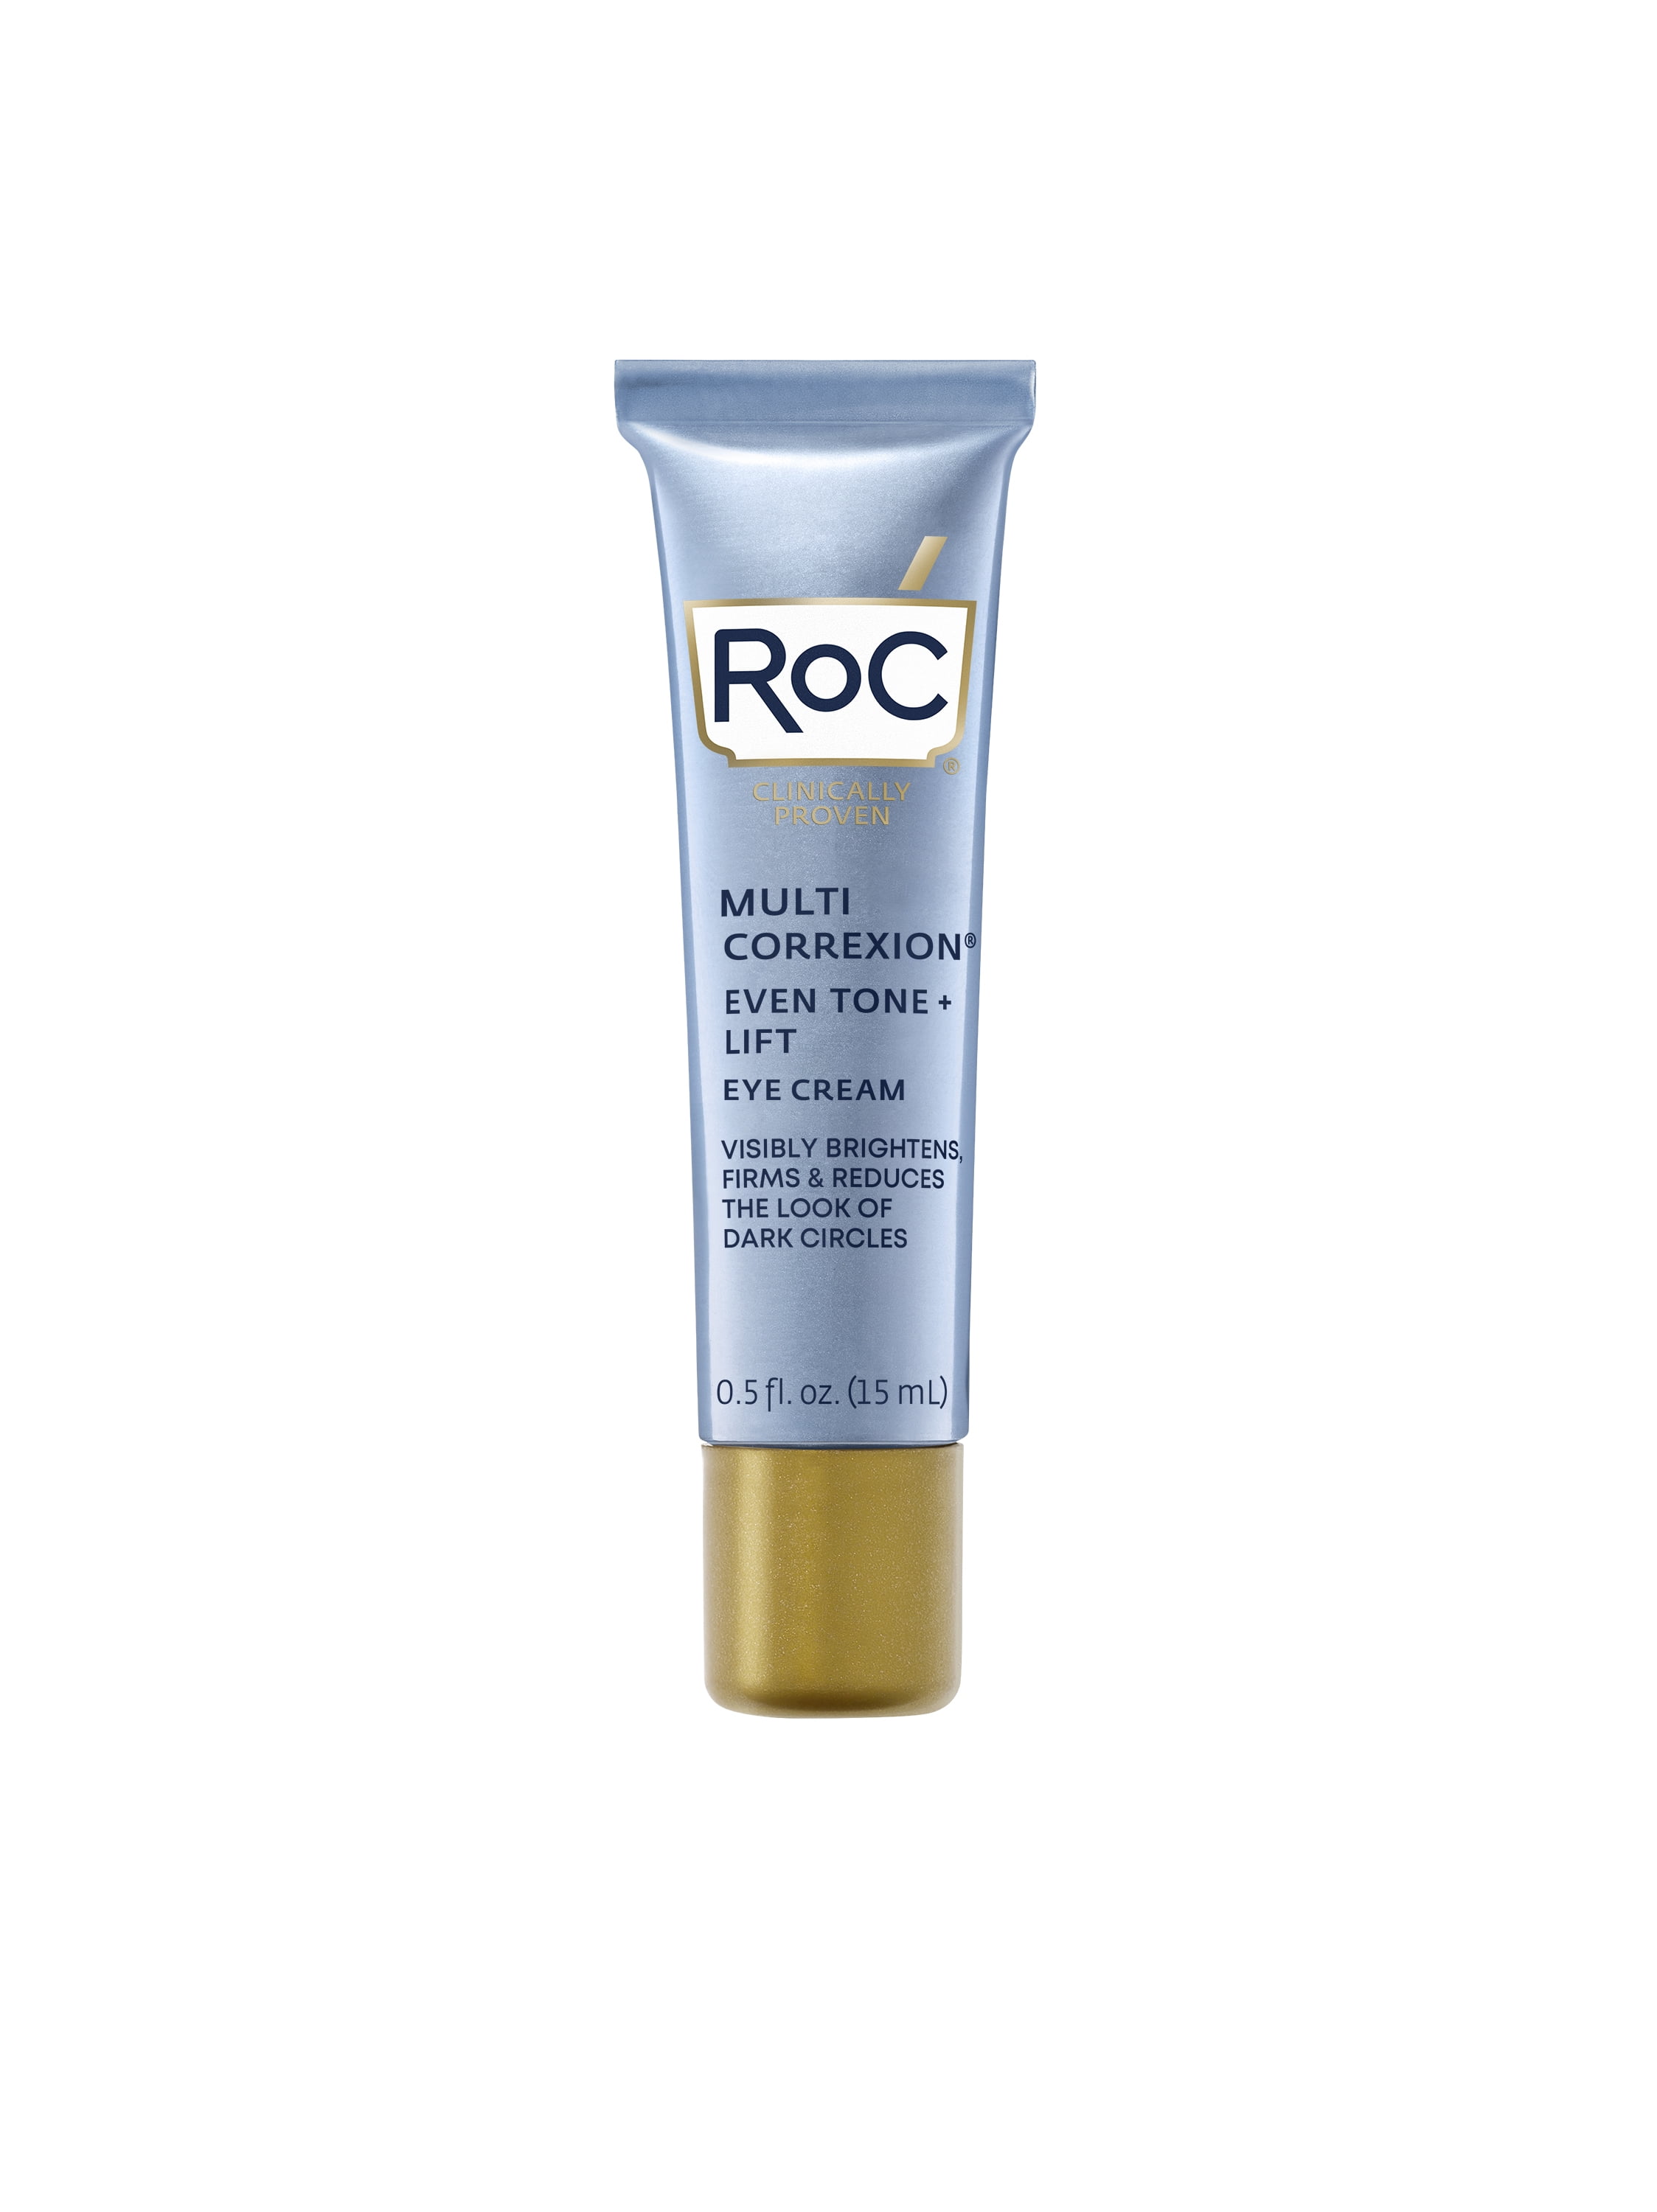 Roc retinol correxion deep wrinkle anti aging night cream